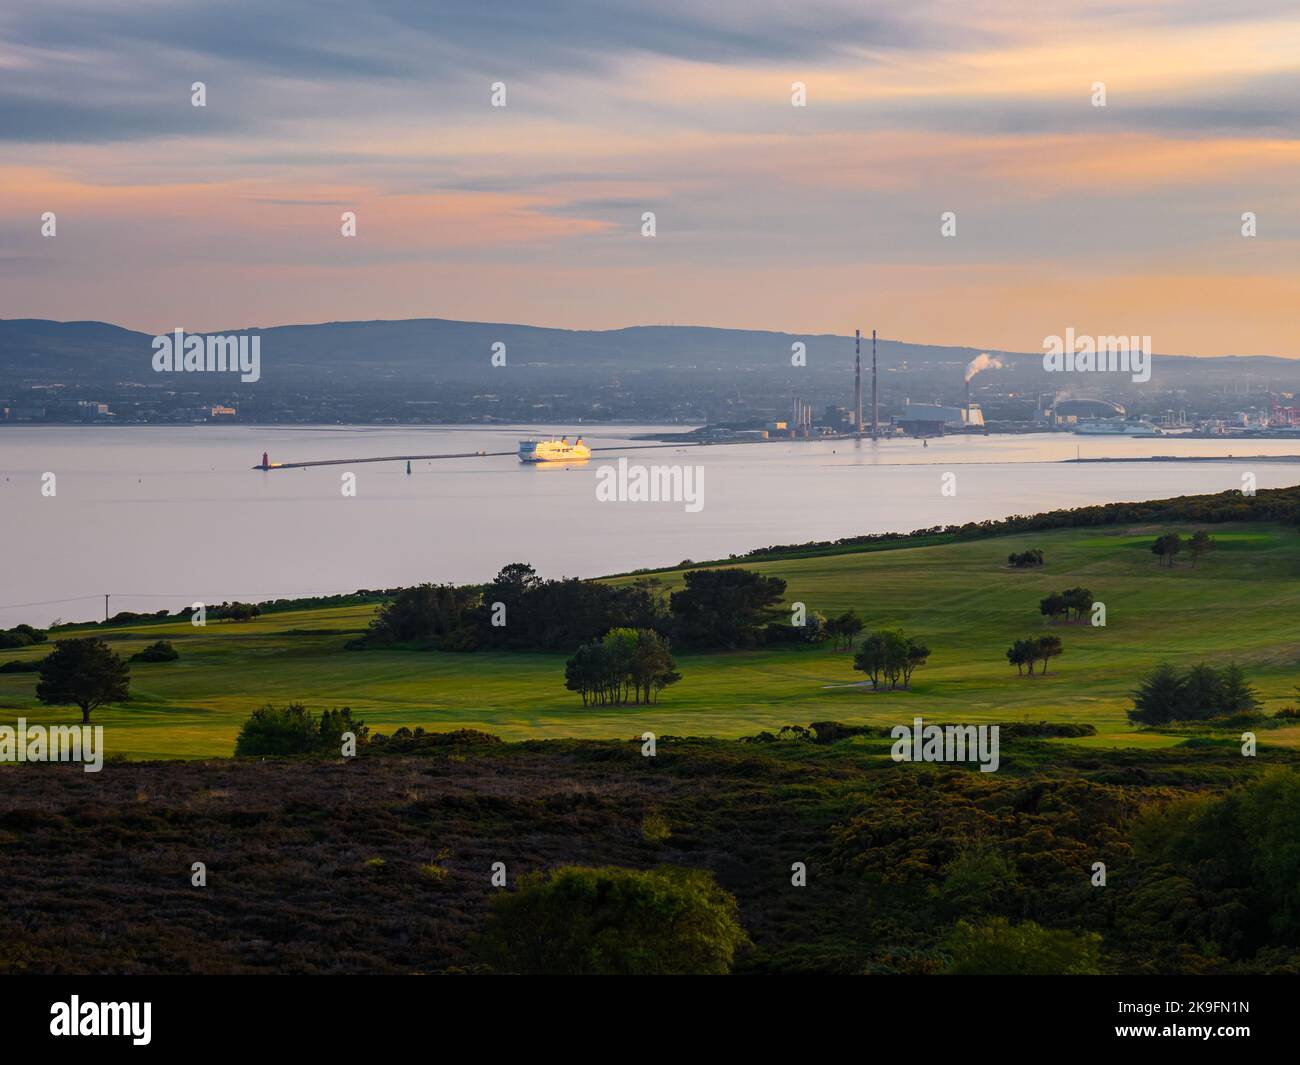 Dublin Panoramic view with mountains - Ireland Stock Photo